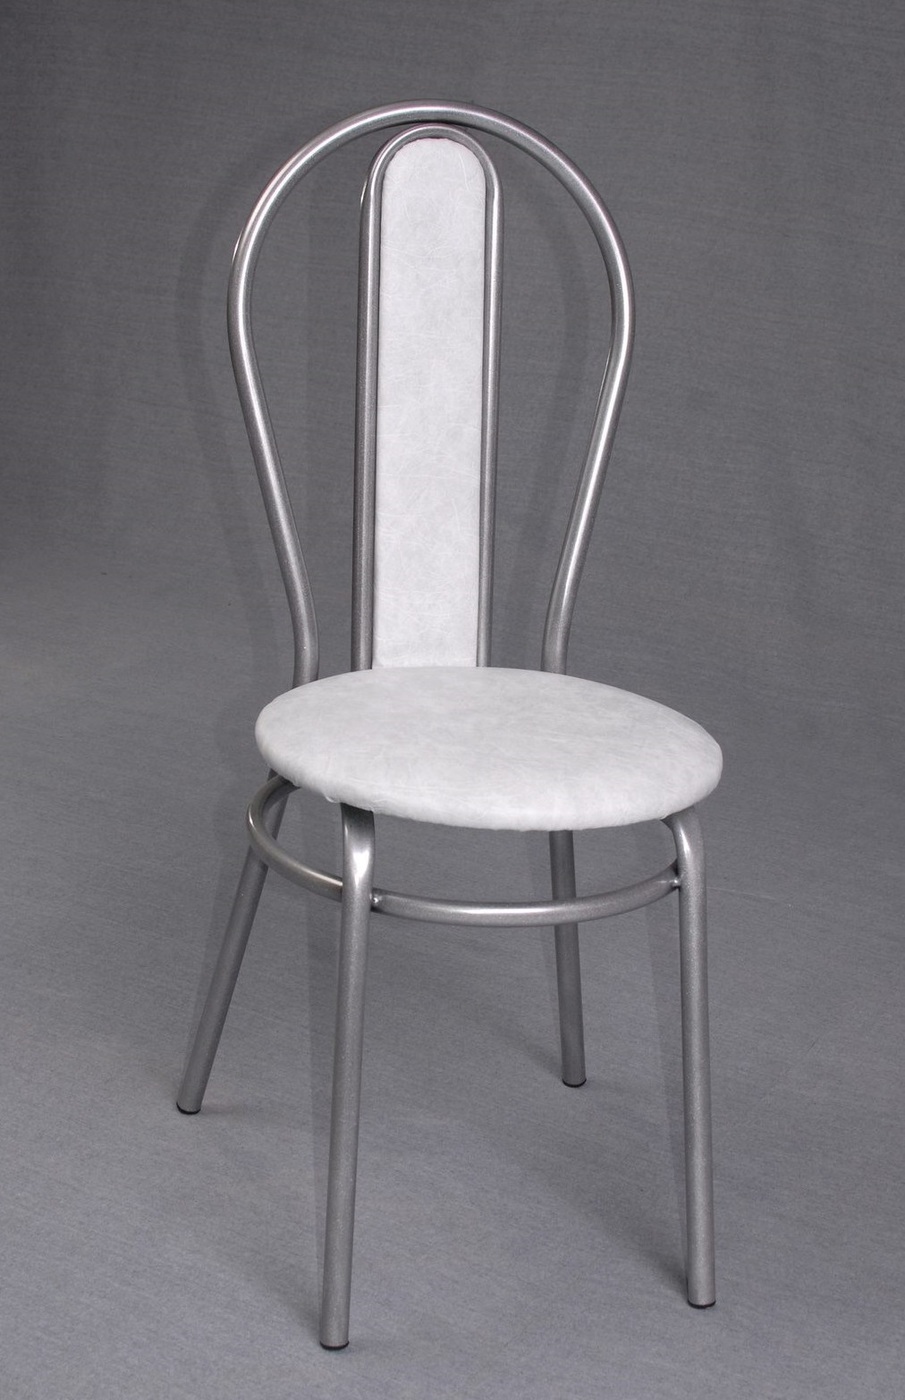 стул с металлическим сиденьем